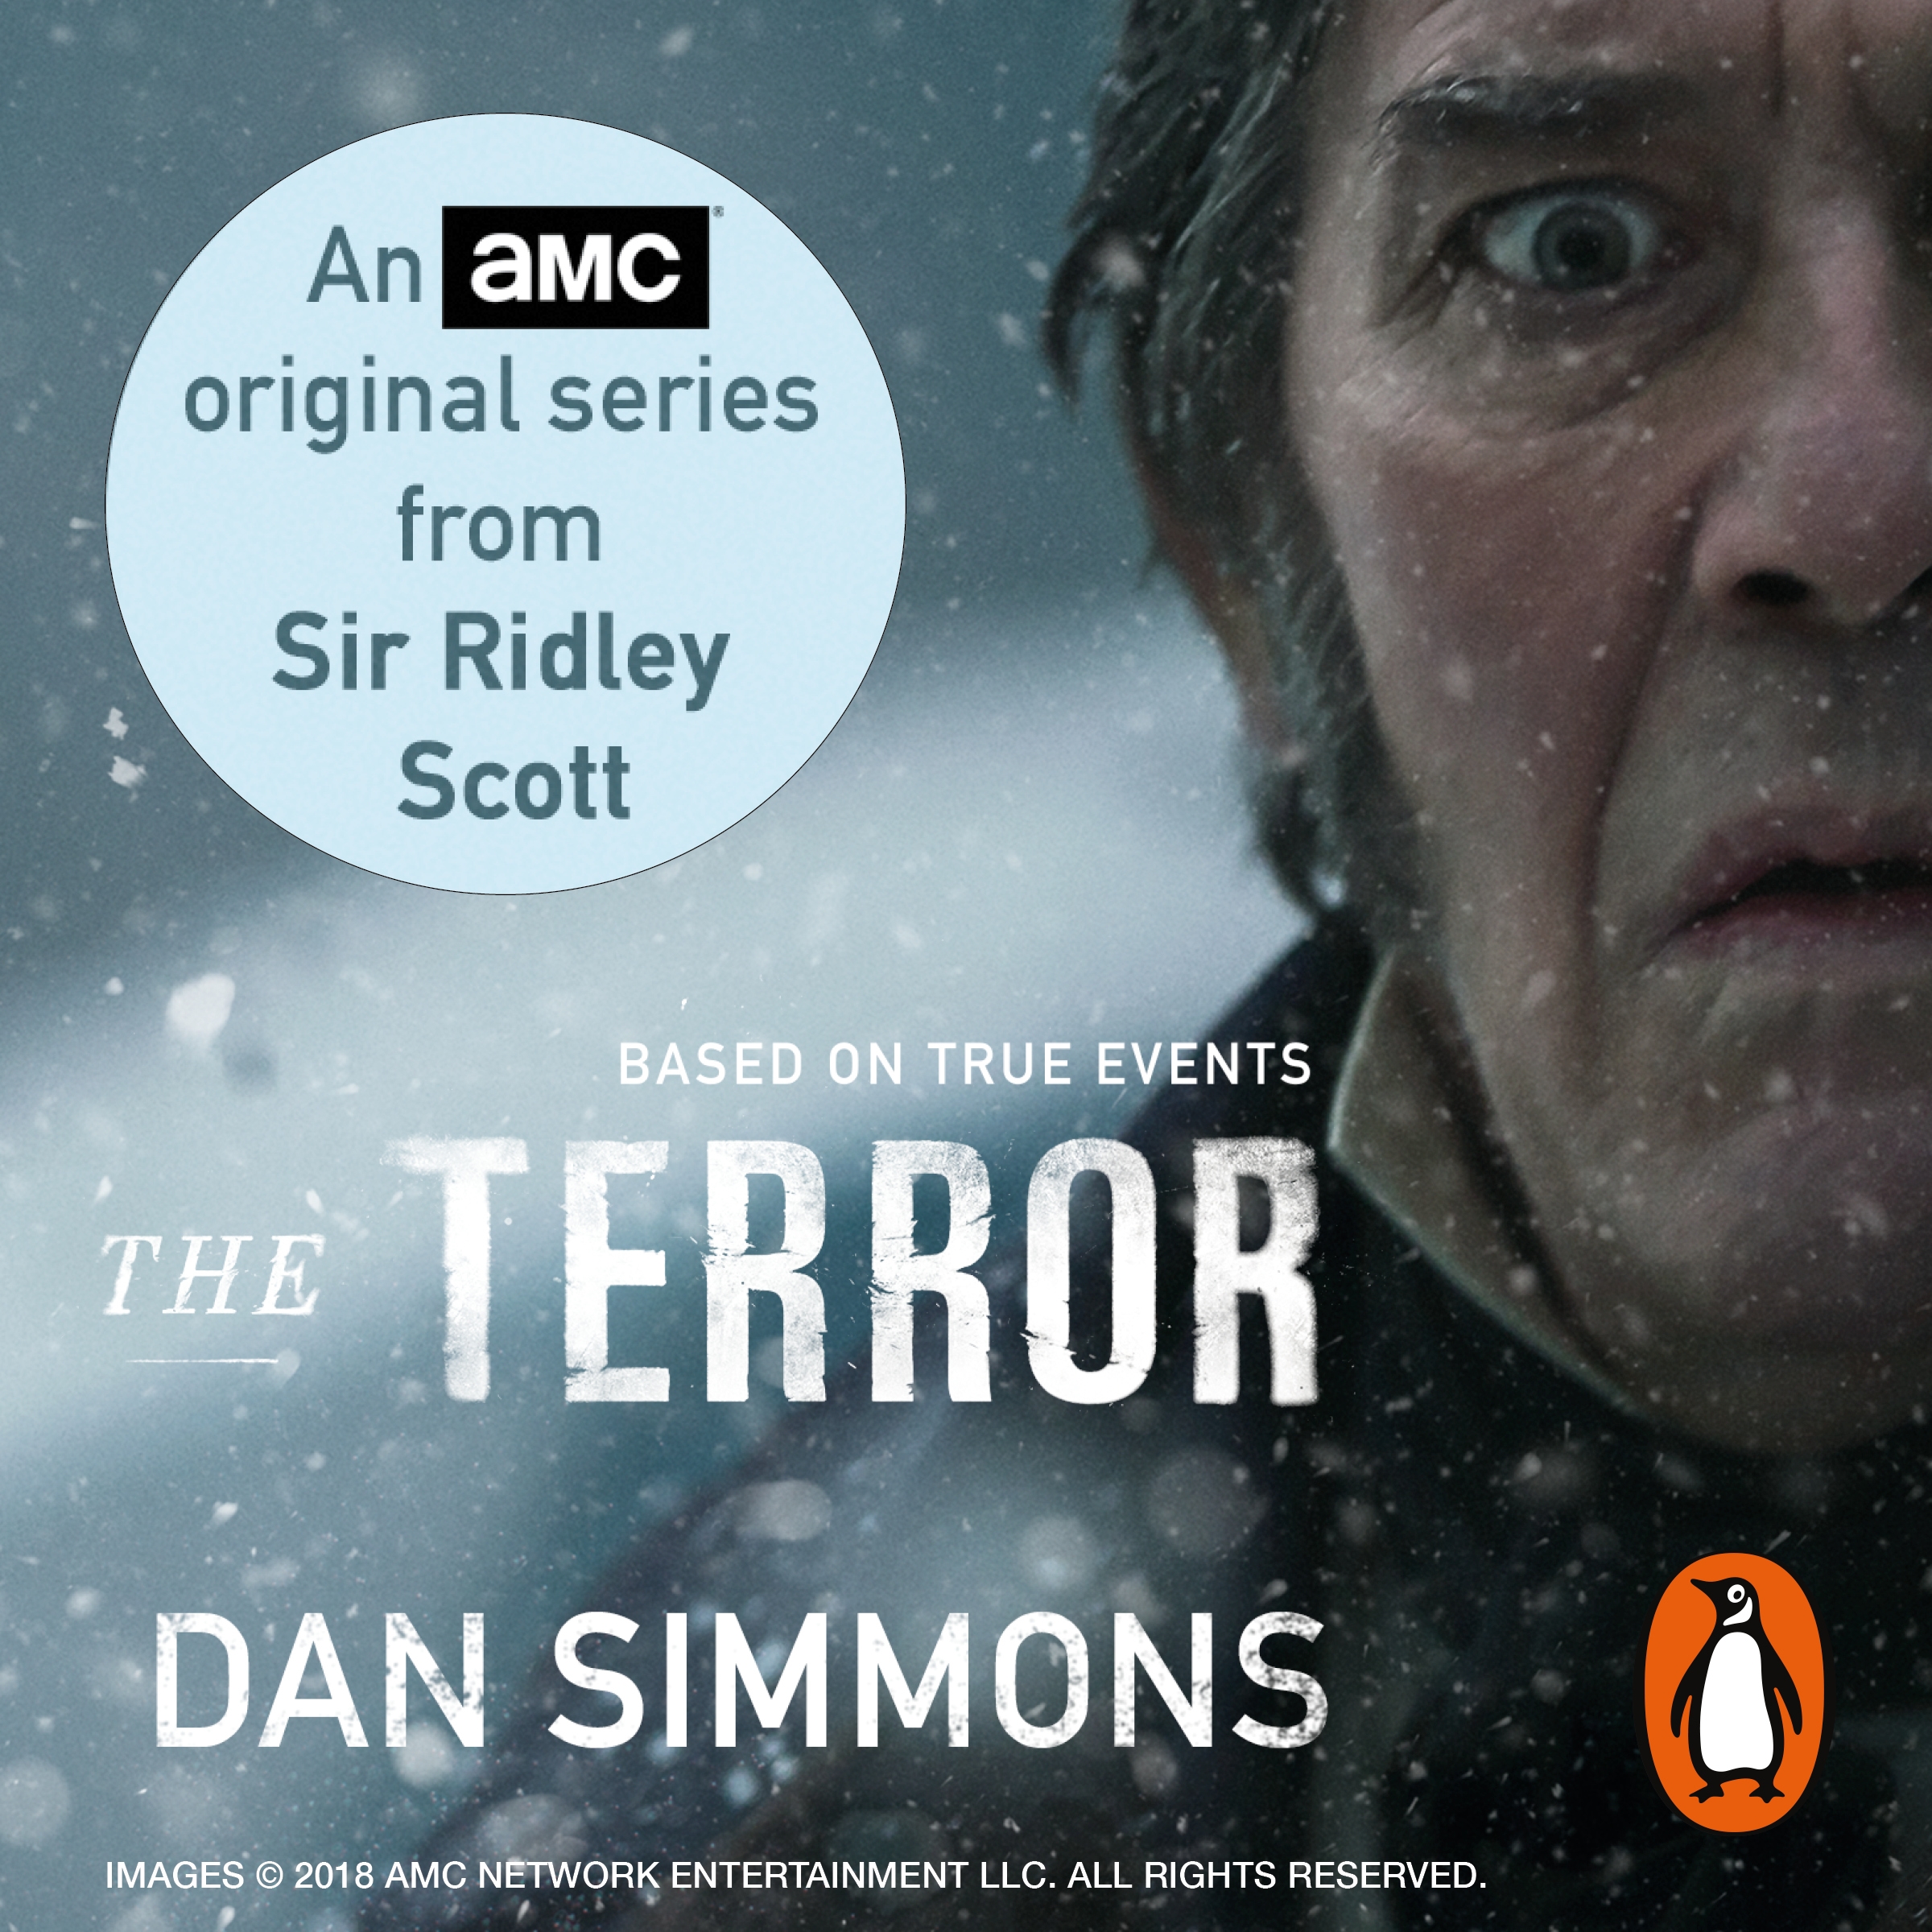 the terror by dan simmons